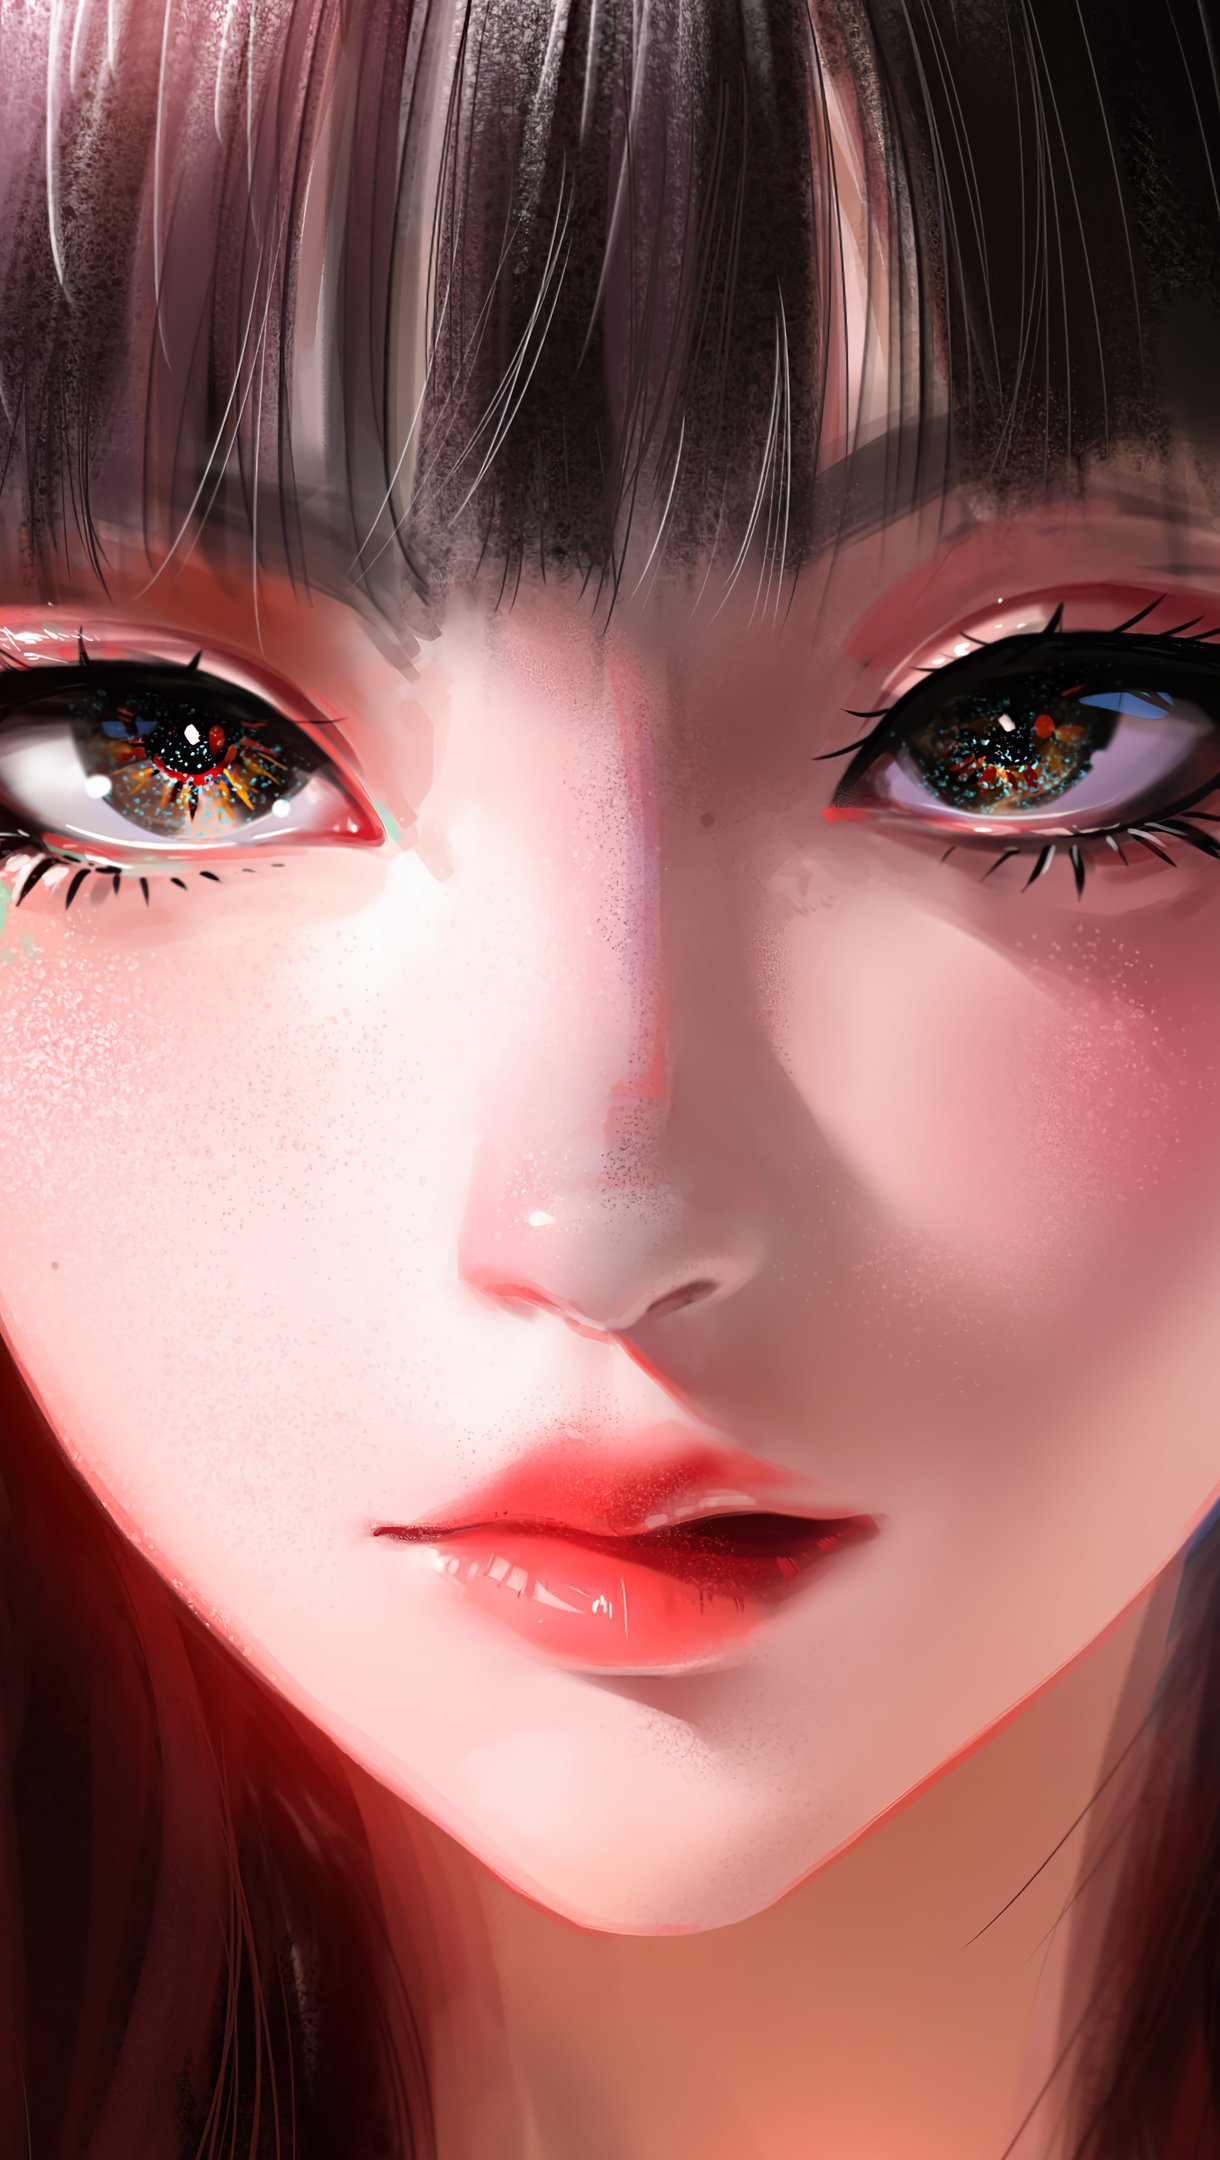 Anime girl Digital Art Wallpaper 4k Ultra HD ID:9879